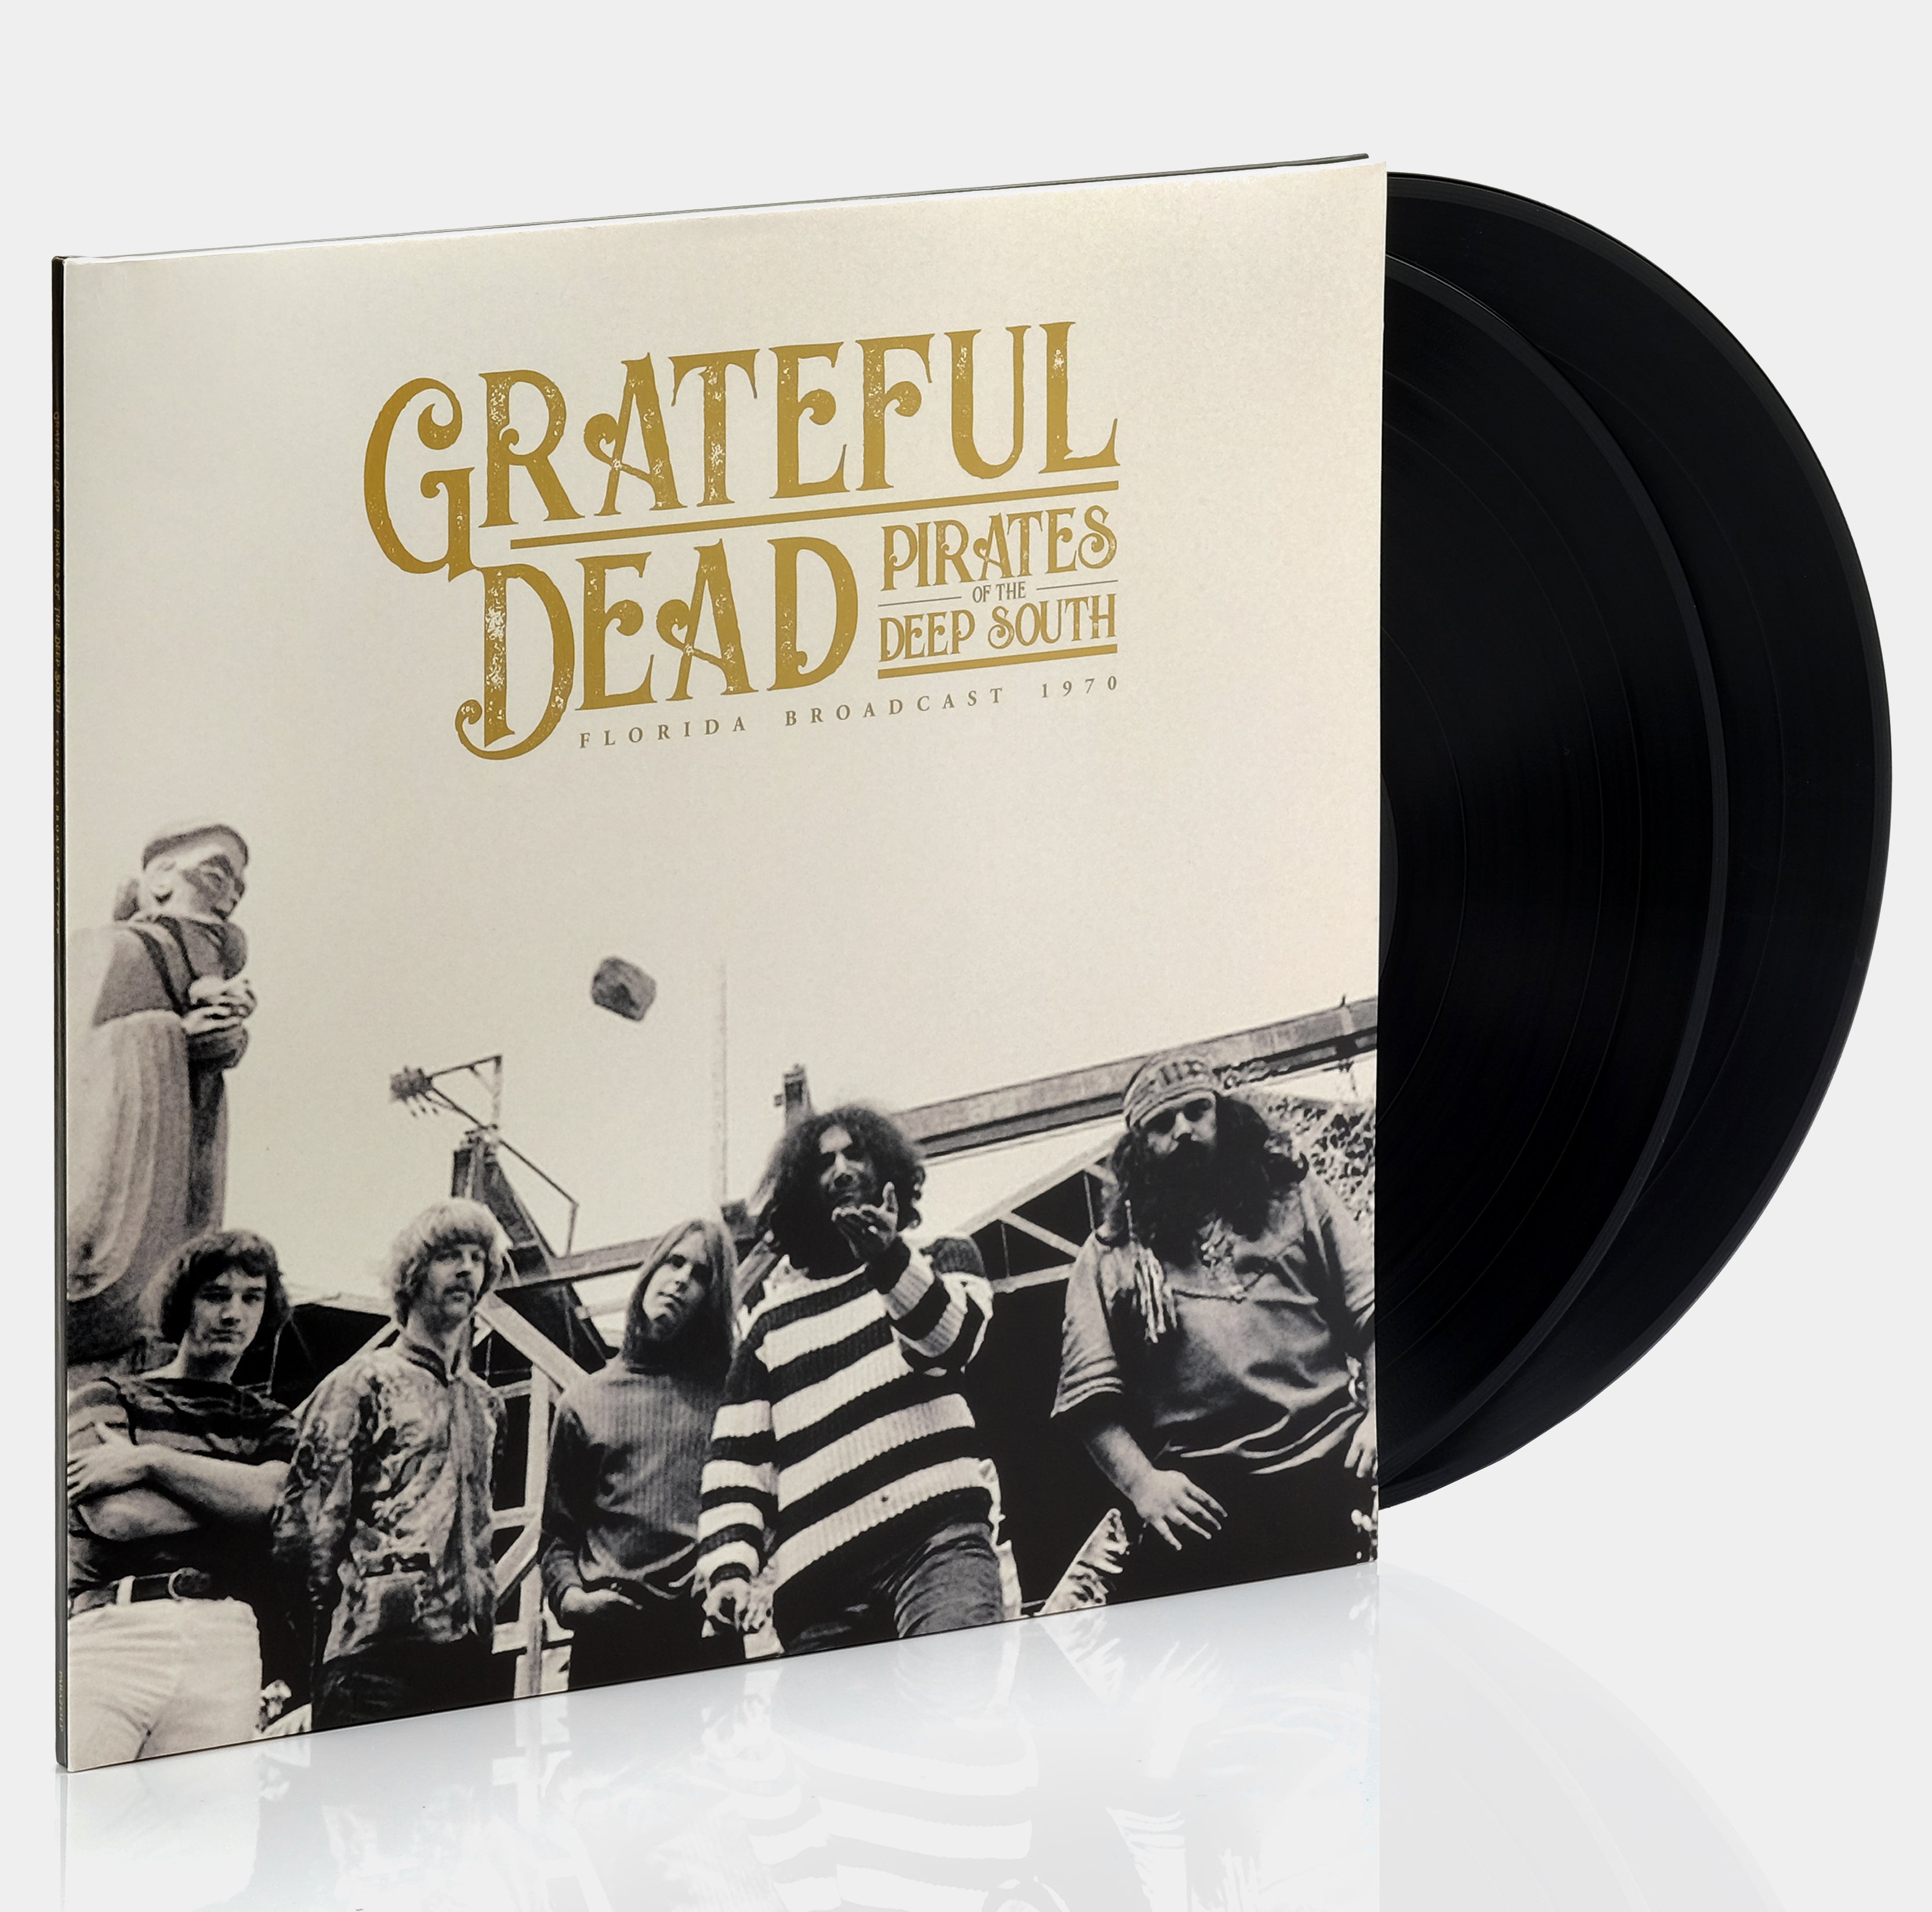 Grateful Dead - Pirates of the Deep South Florida Broadcast 1970 2xLP Vinyl Record